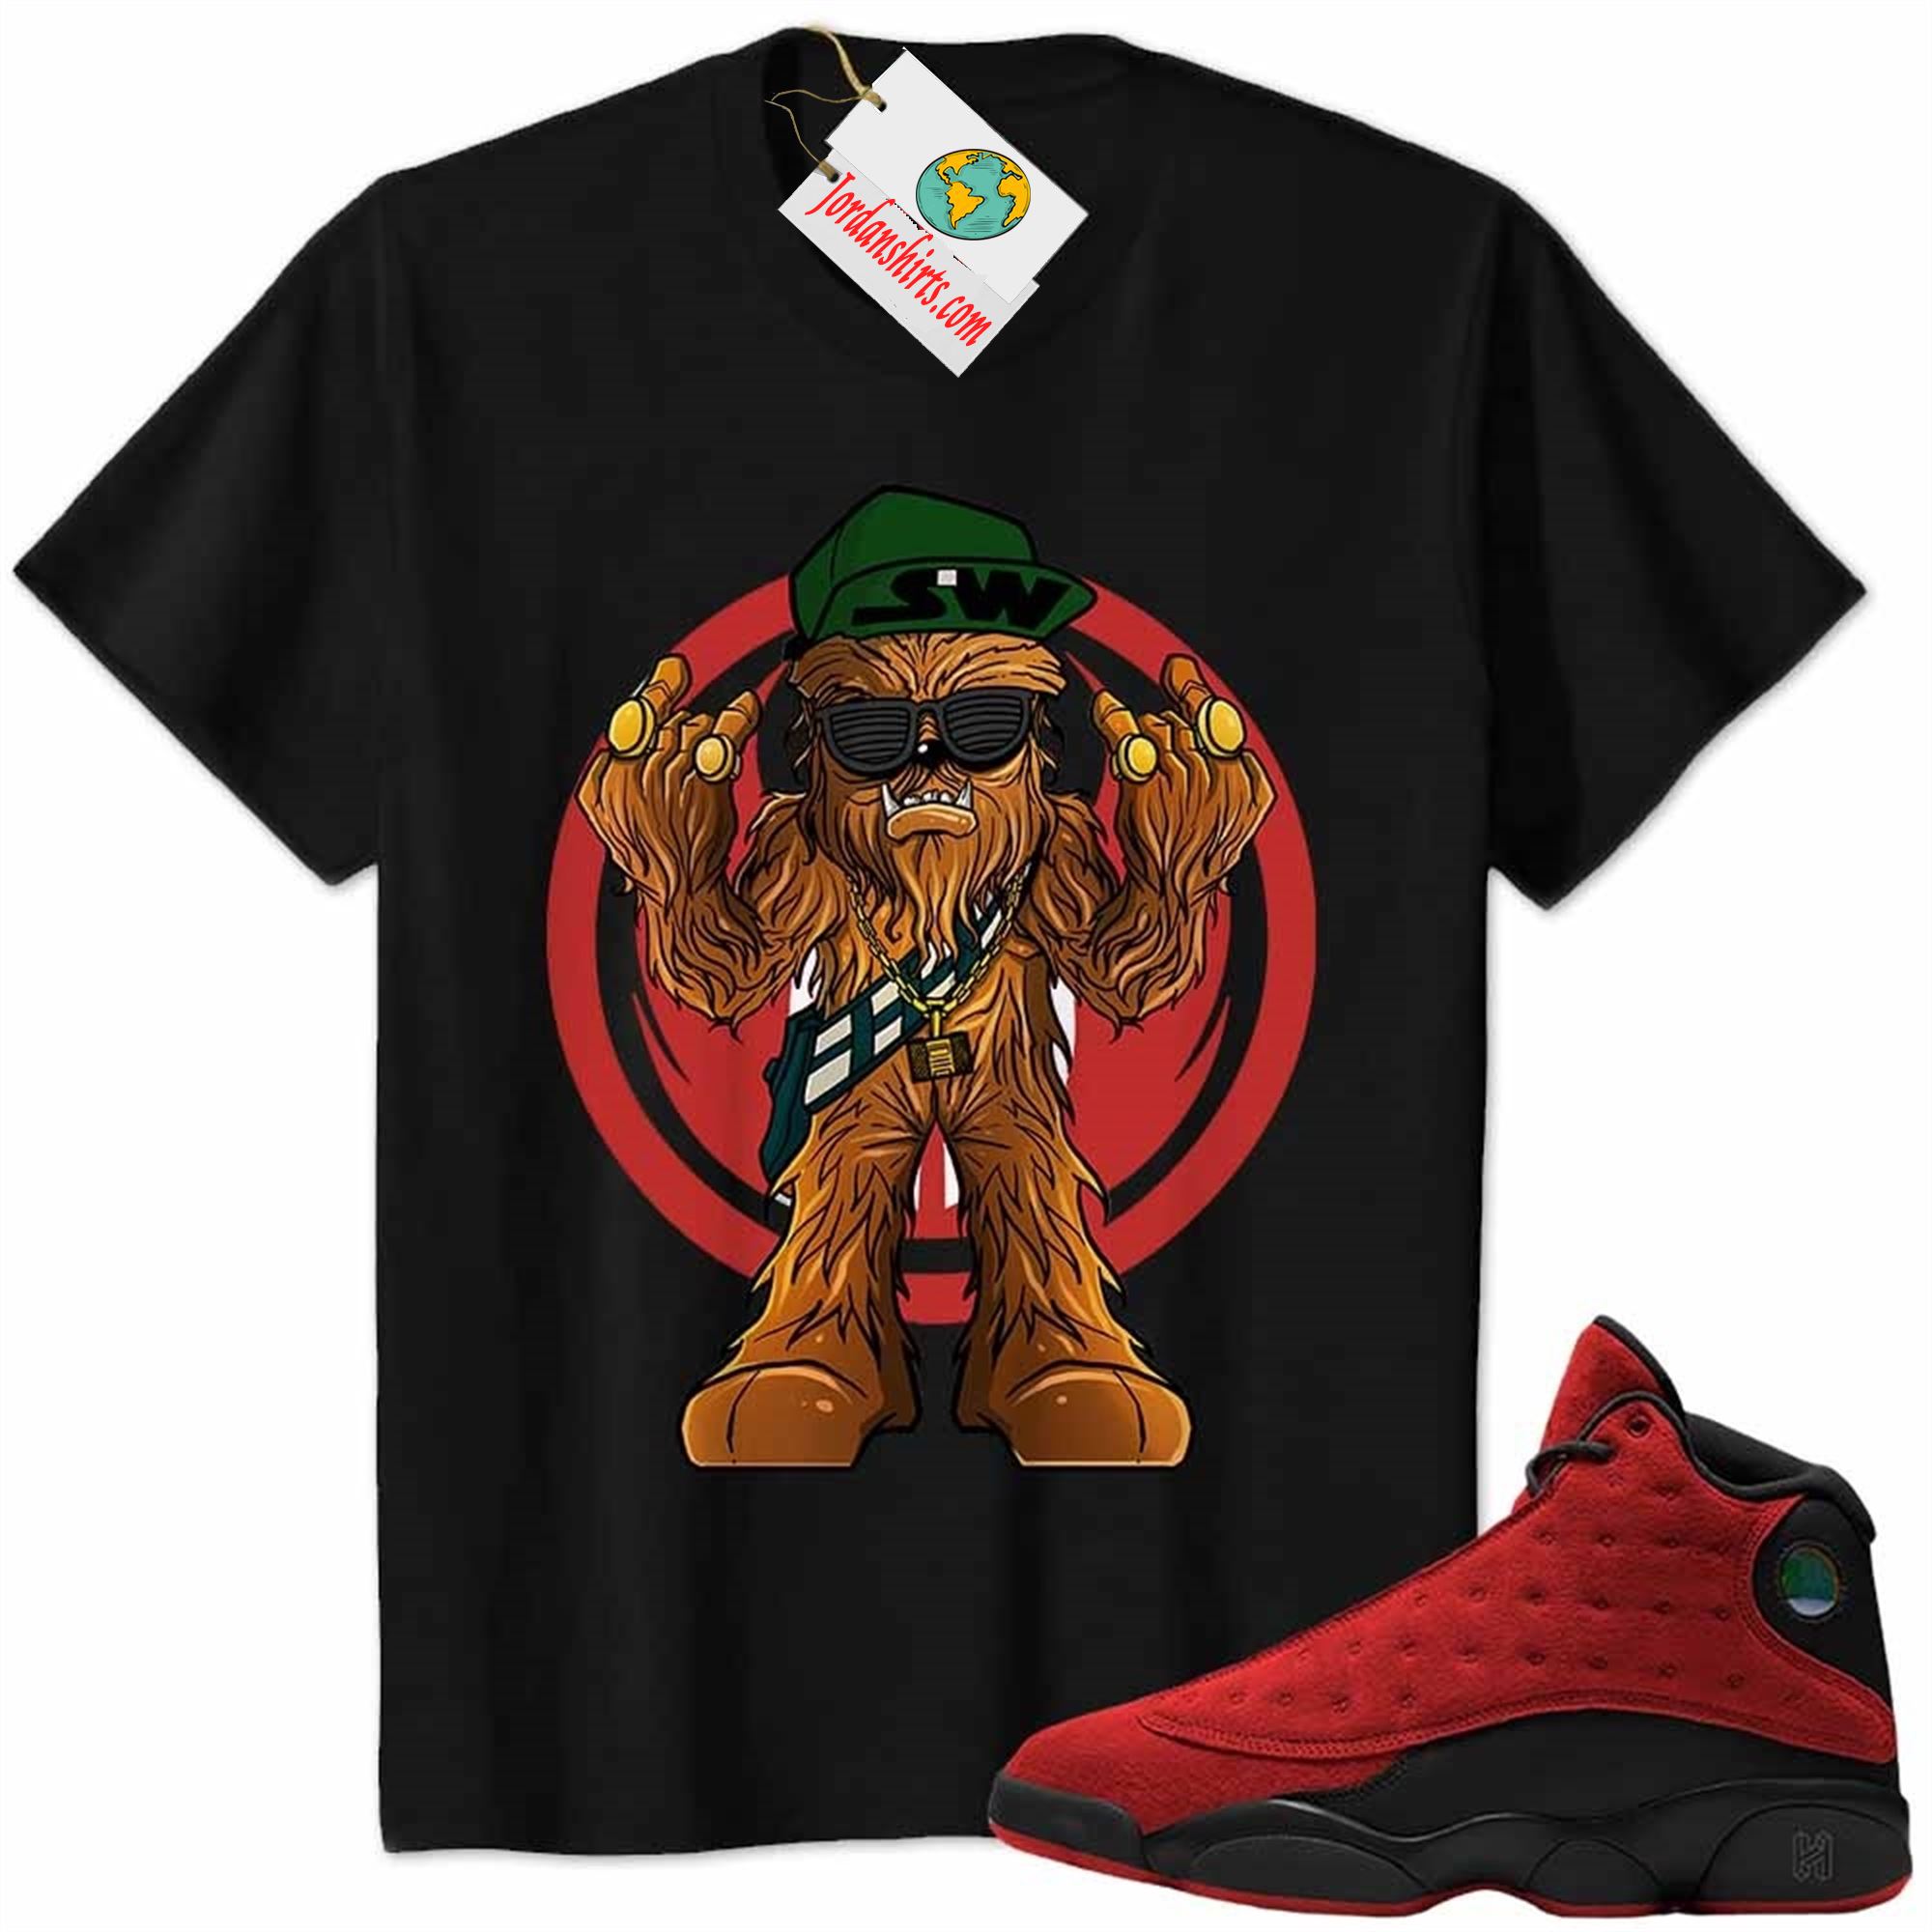 Jordan 13 Shirt, Gangster Chewbacca Stars War Black Air Jordan 13 Reverse Bred 13s Full Size Up To 5xl